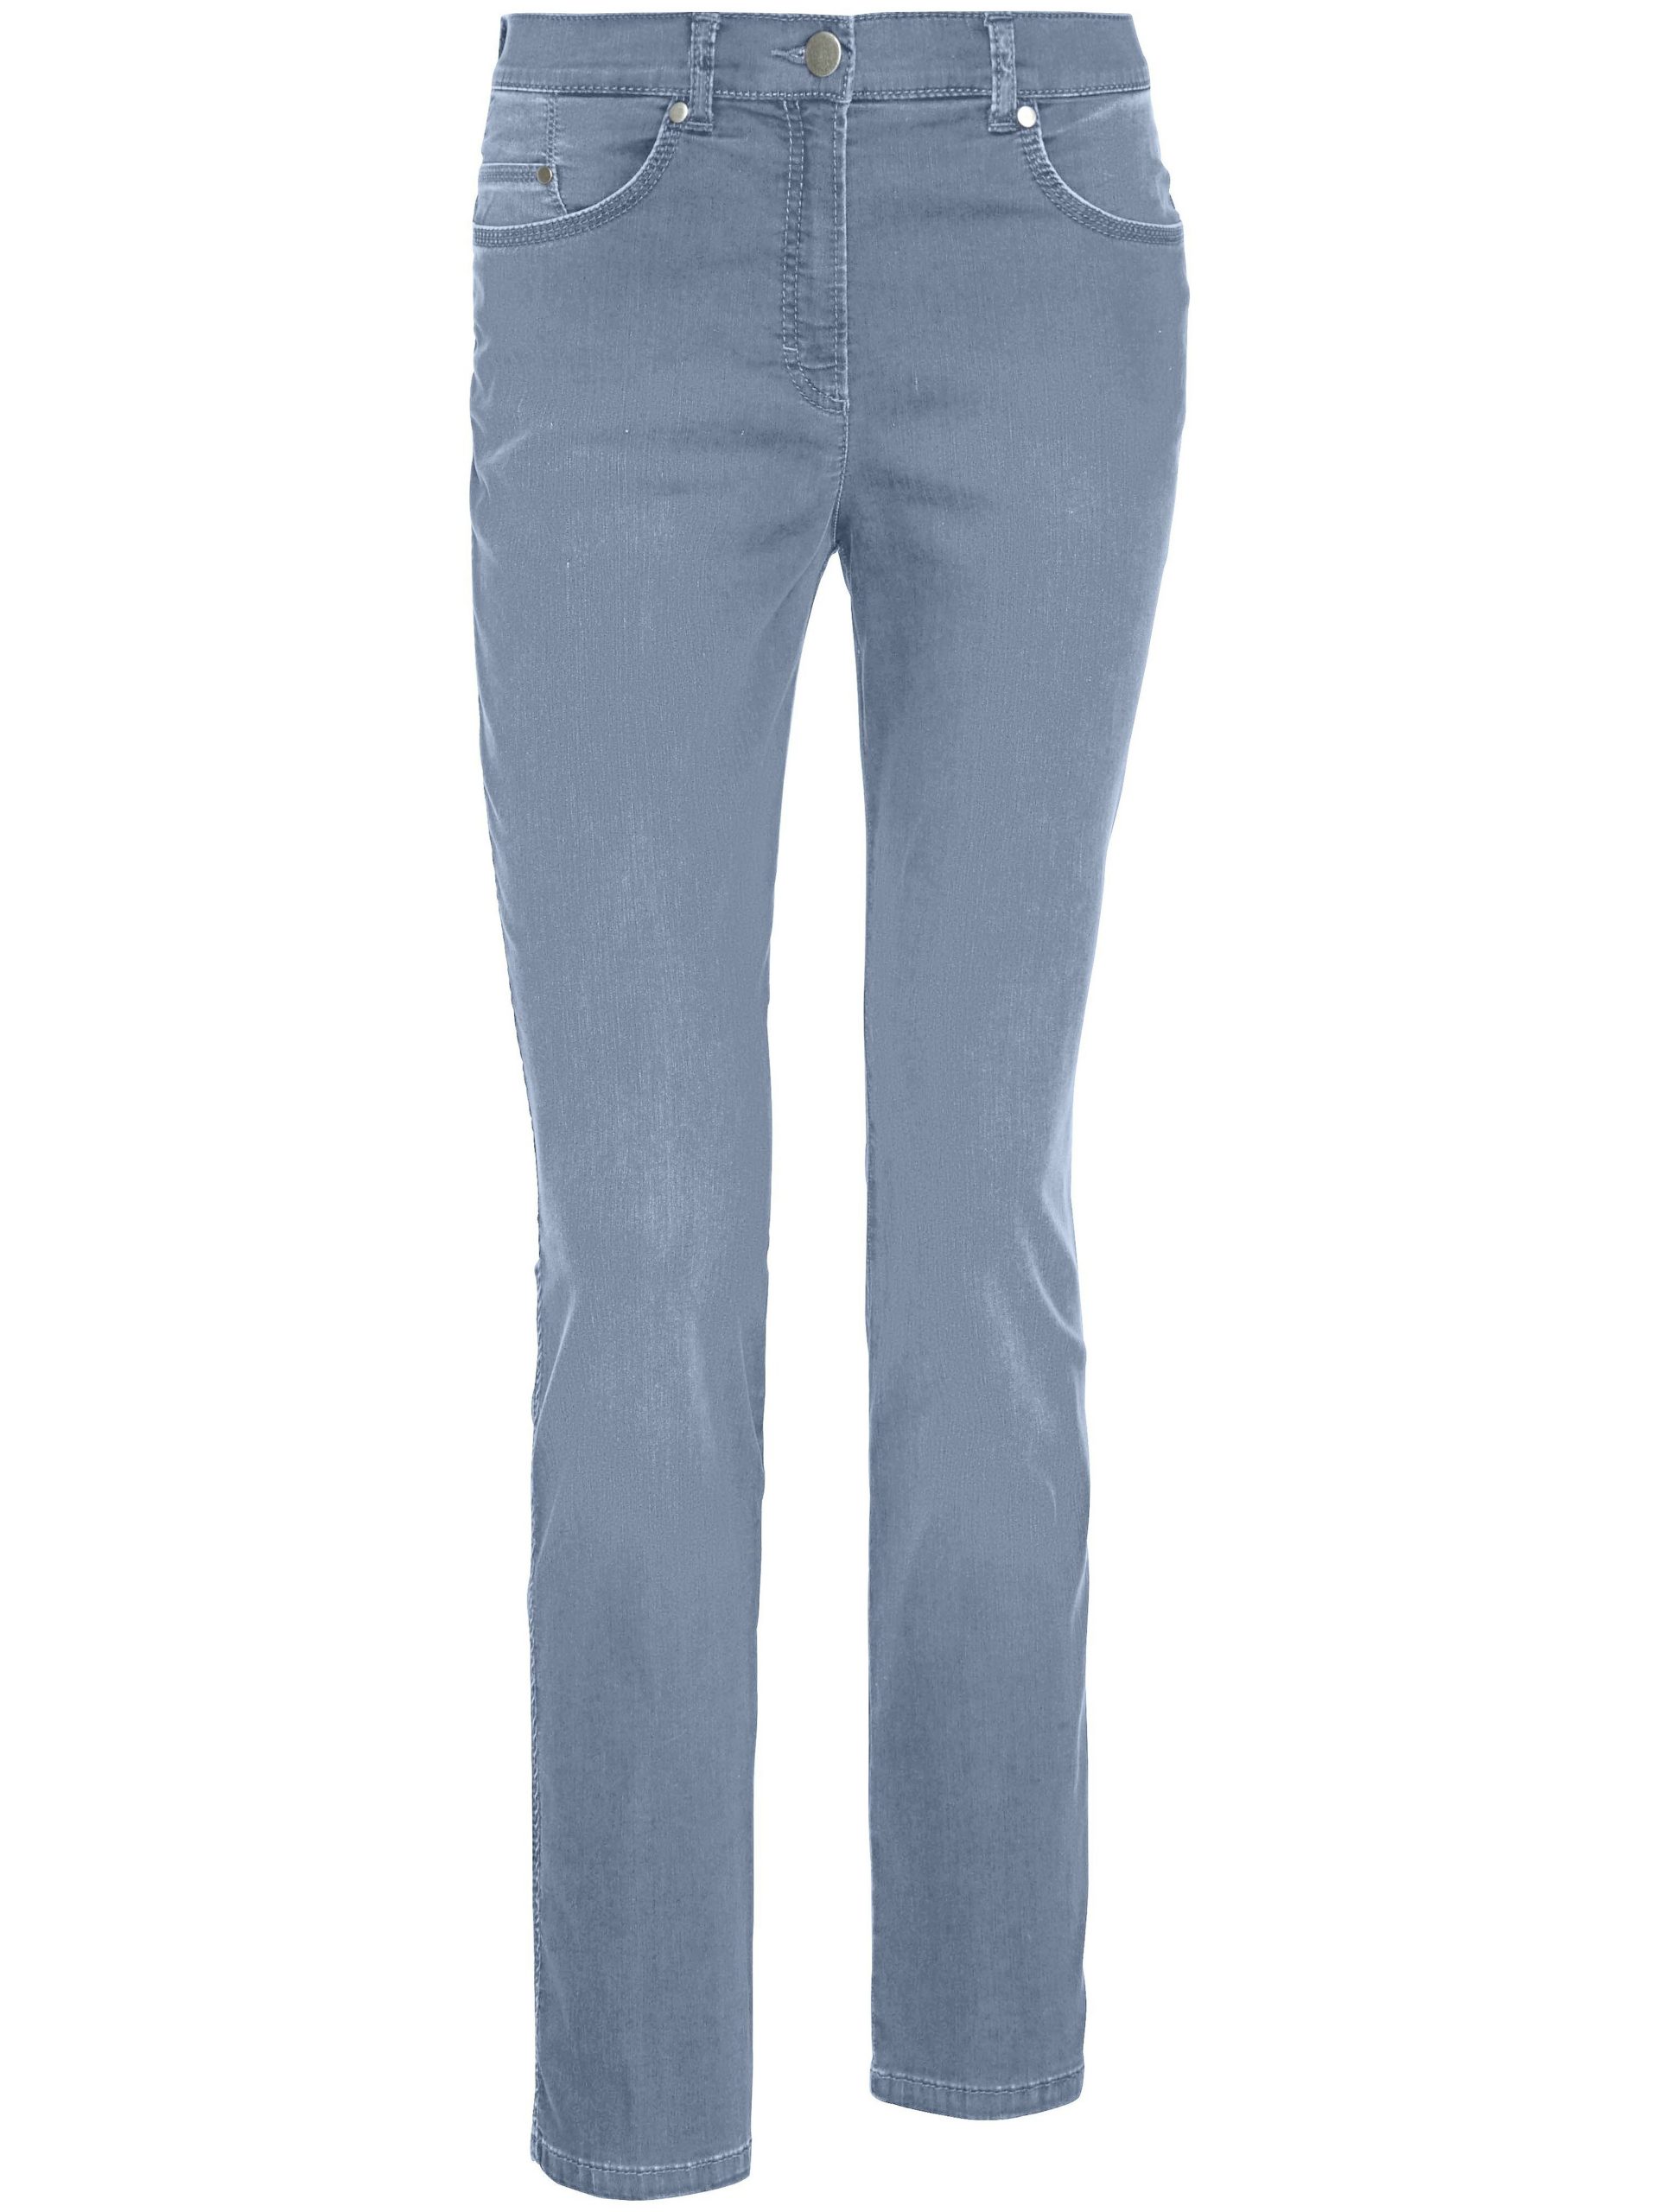 Modellerende Proform S Super Slim-jeans model Lea Van Raphaela by Brax blauw Kopen